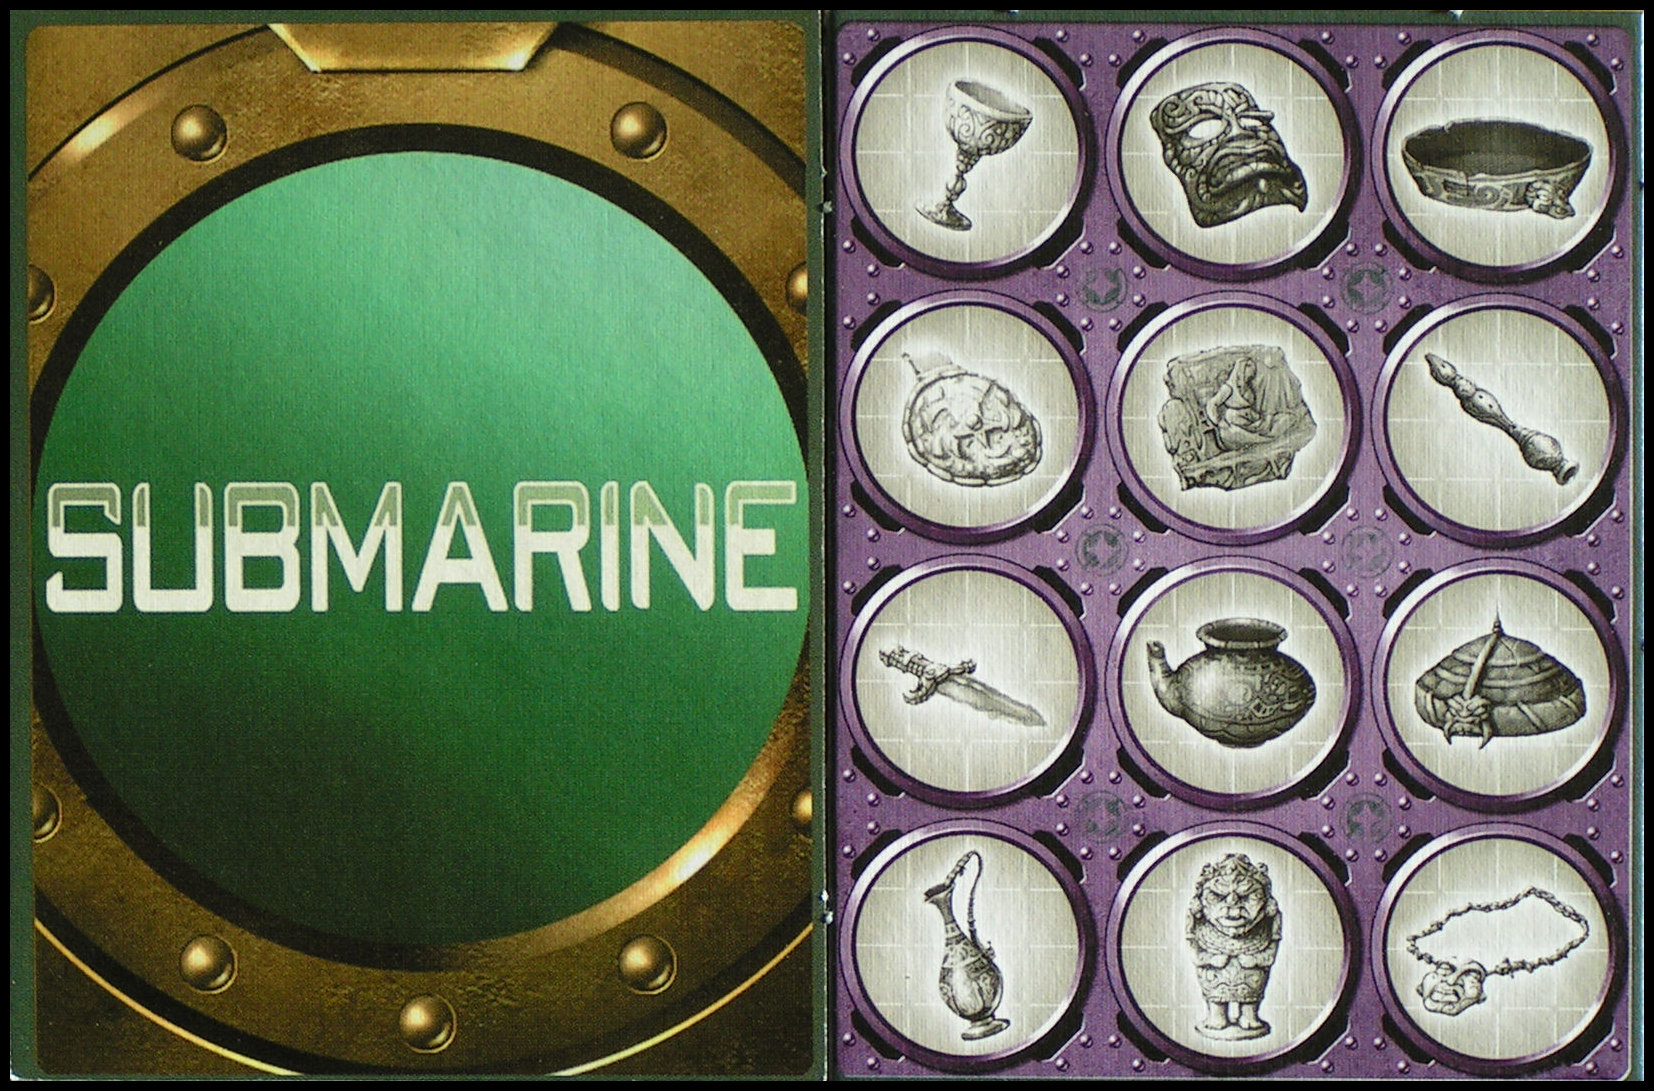 Submarine - Player Board